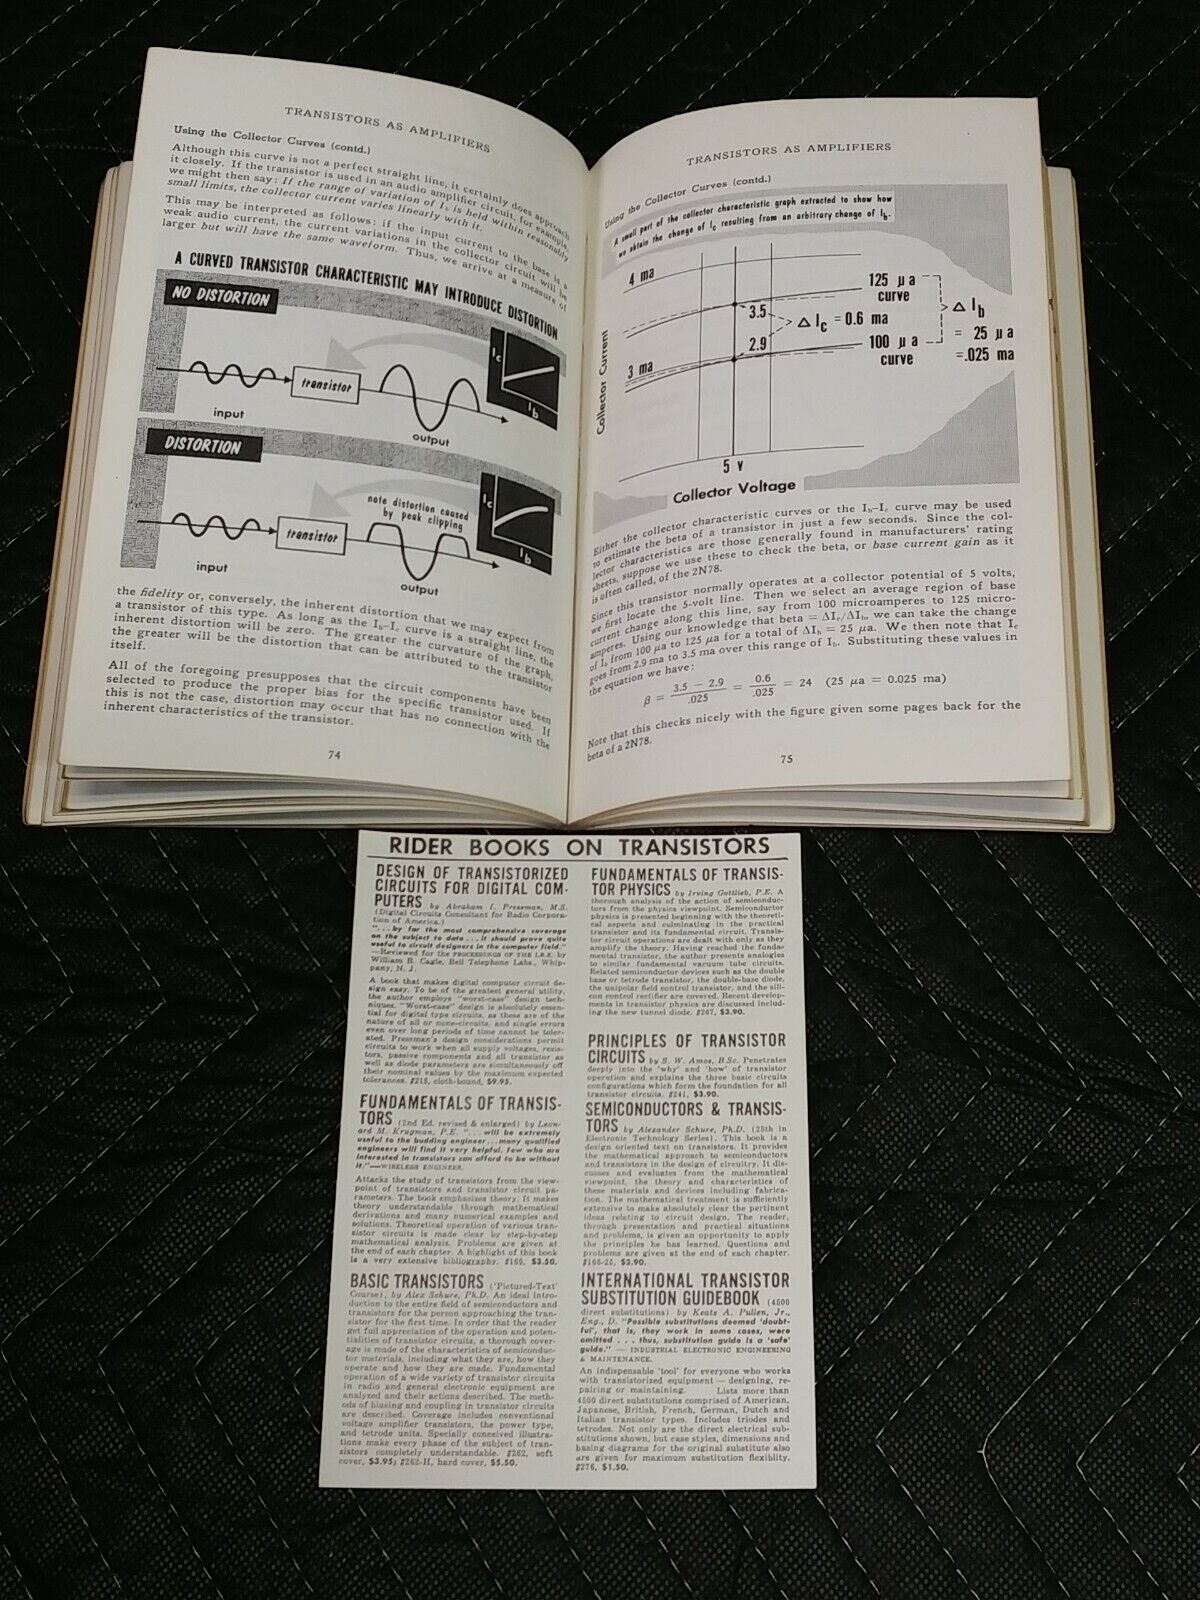 Basic Transistors by A. Schure 1961 Rider Publishing No. 262